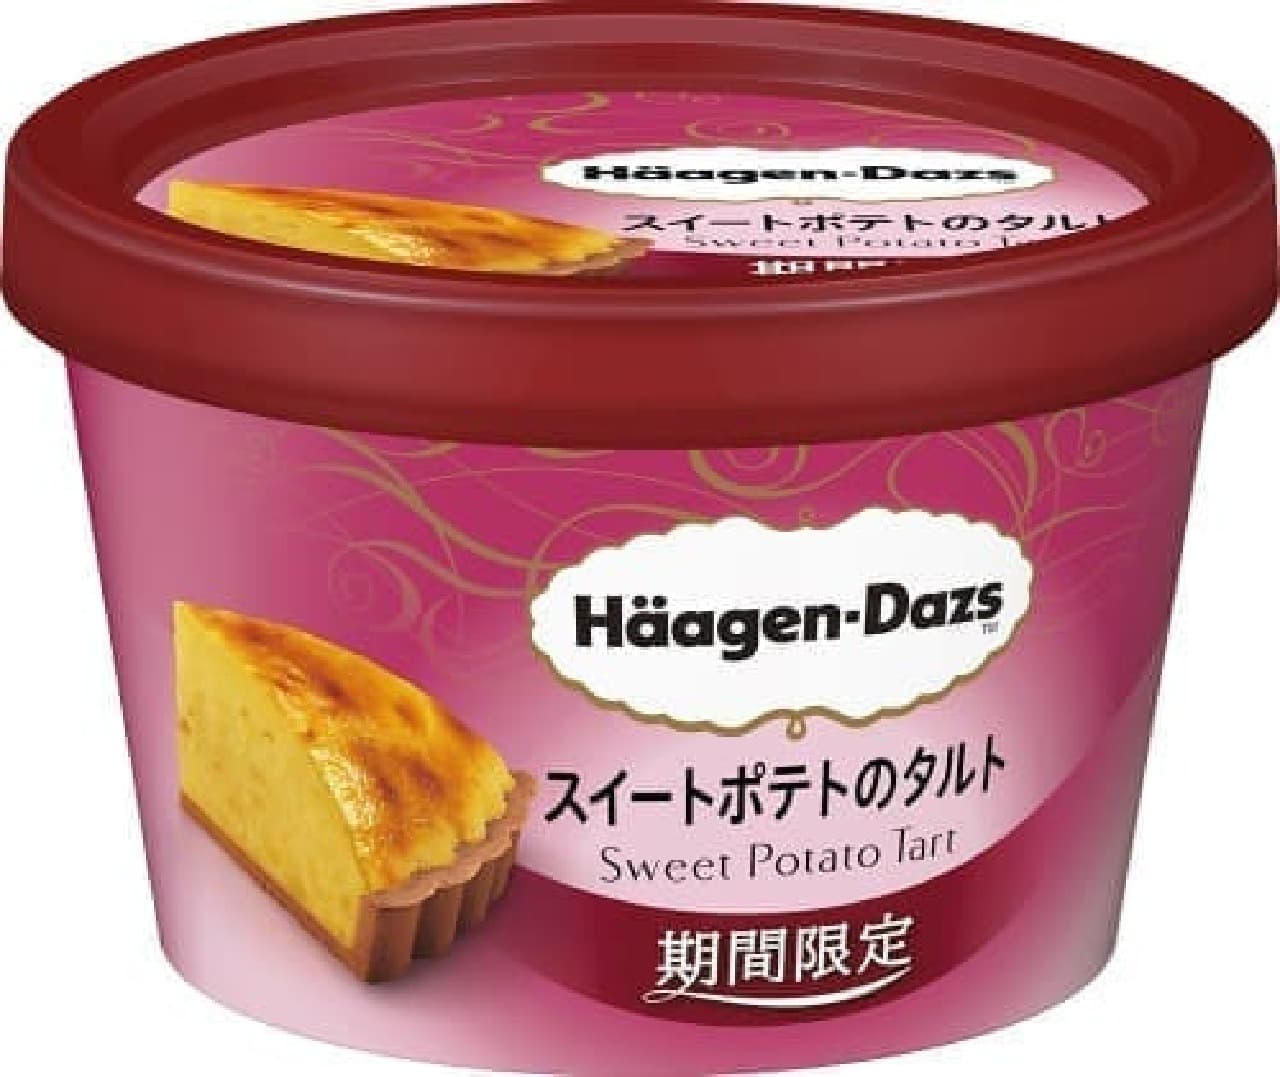 Haagen-Dazs Mini Cup New "Sweet Potato Tart"